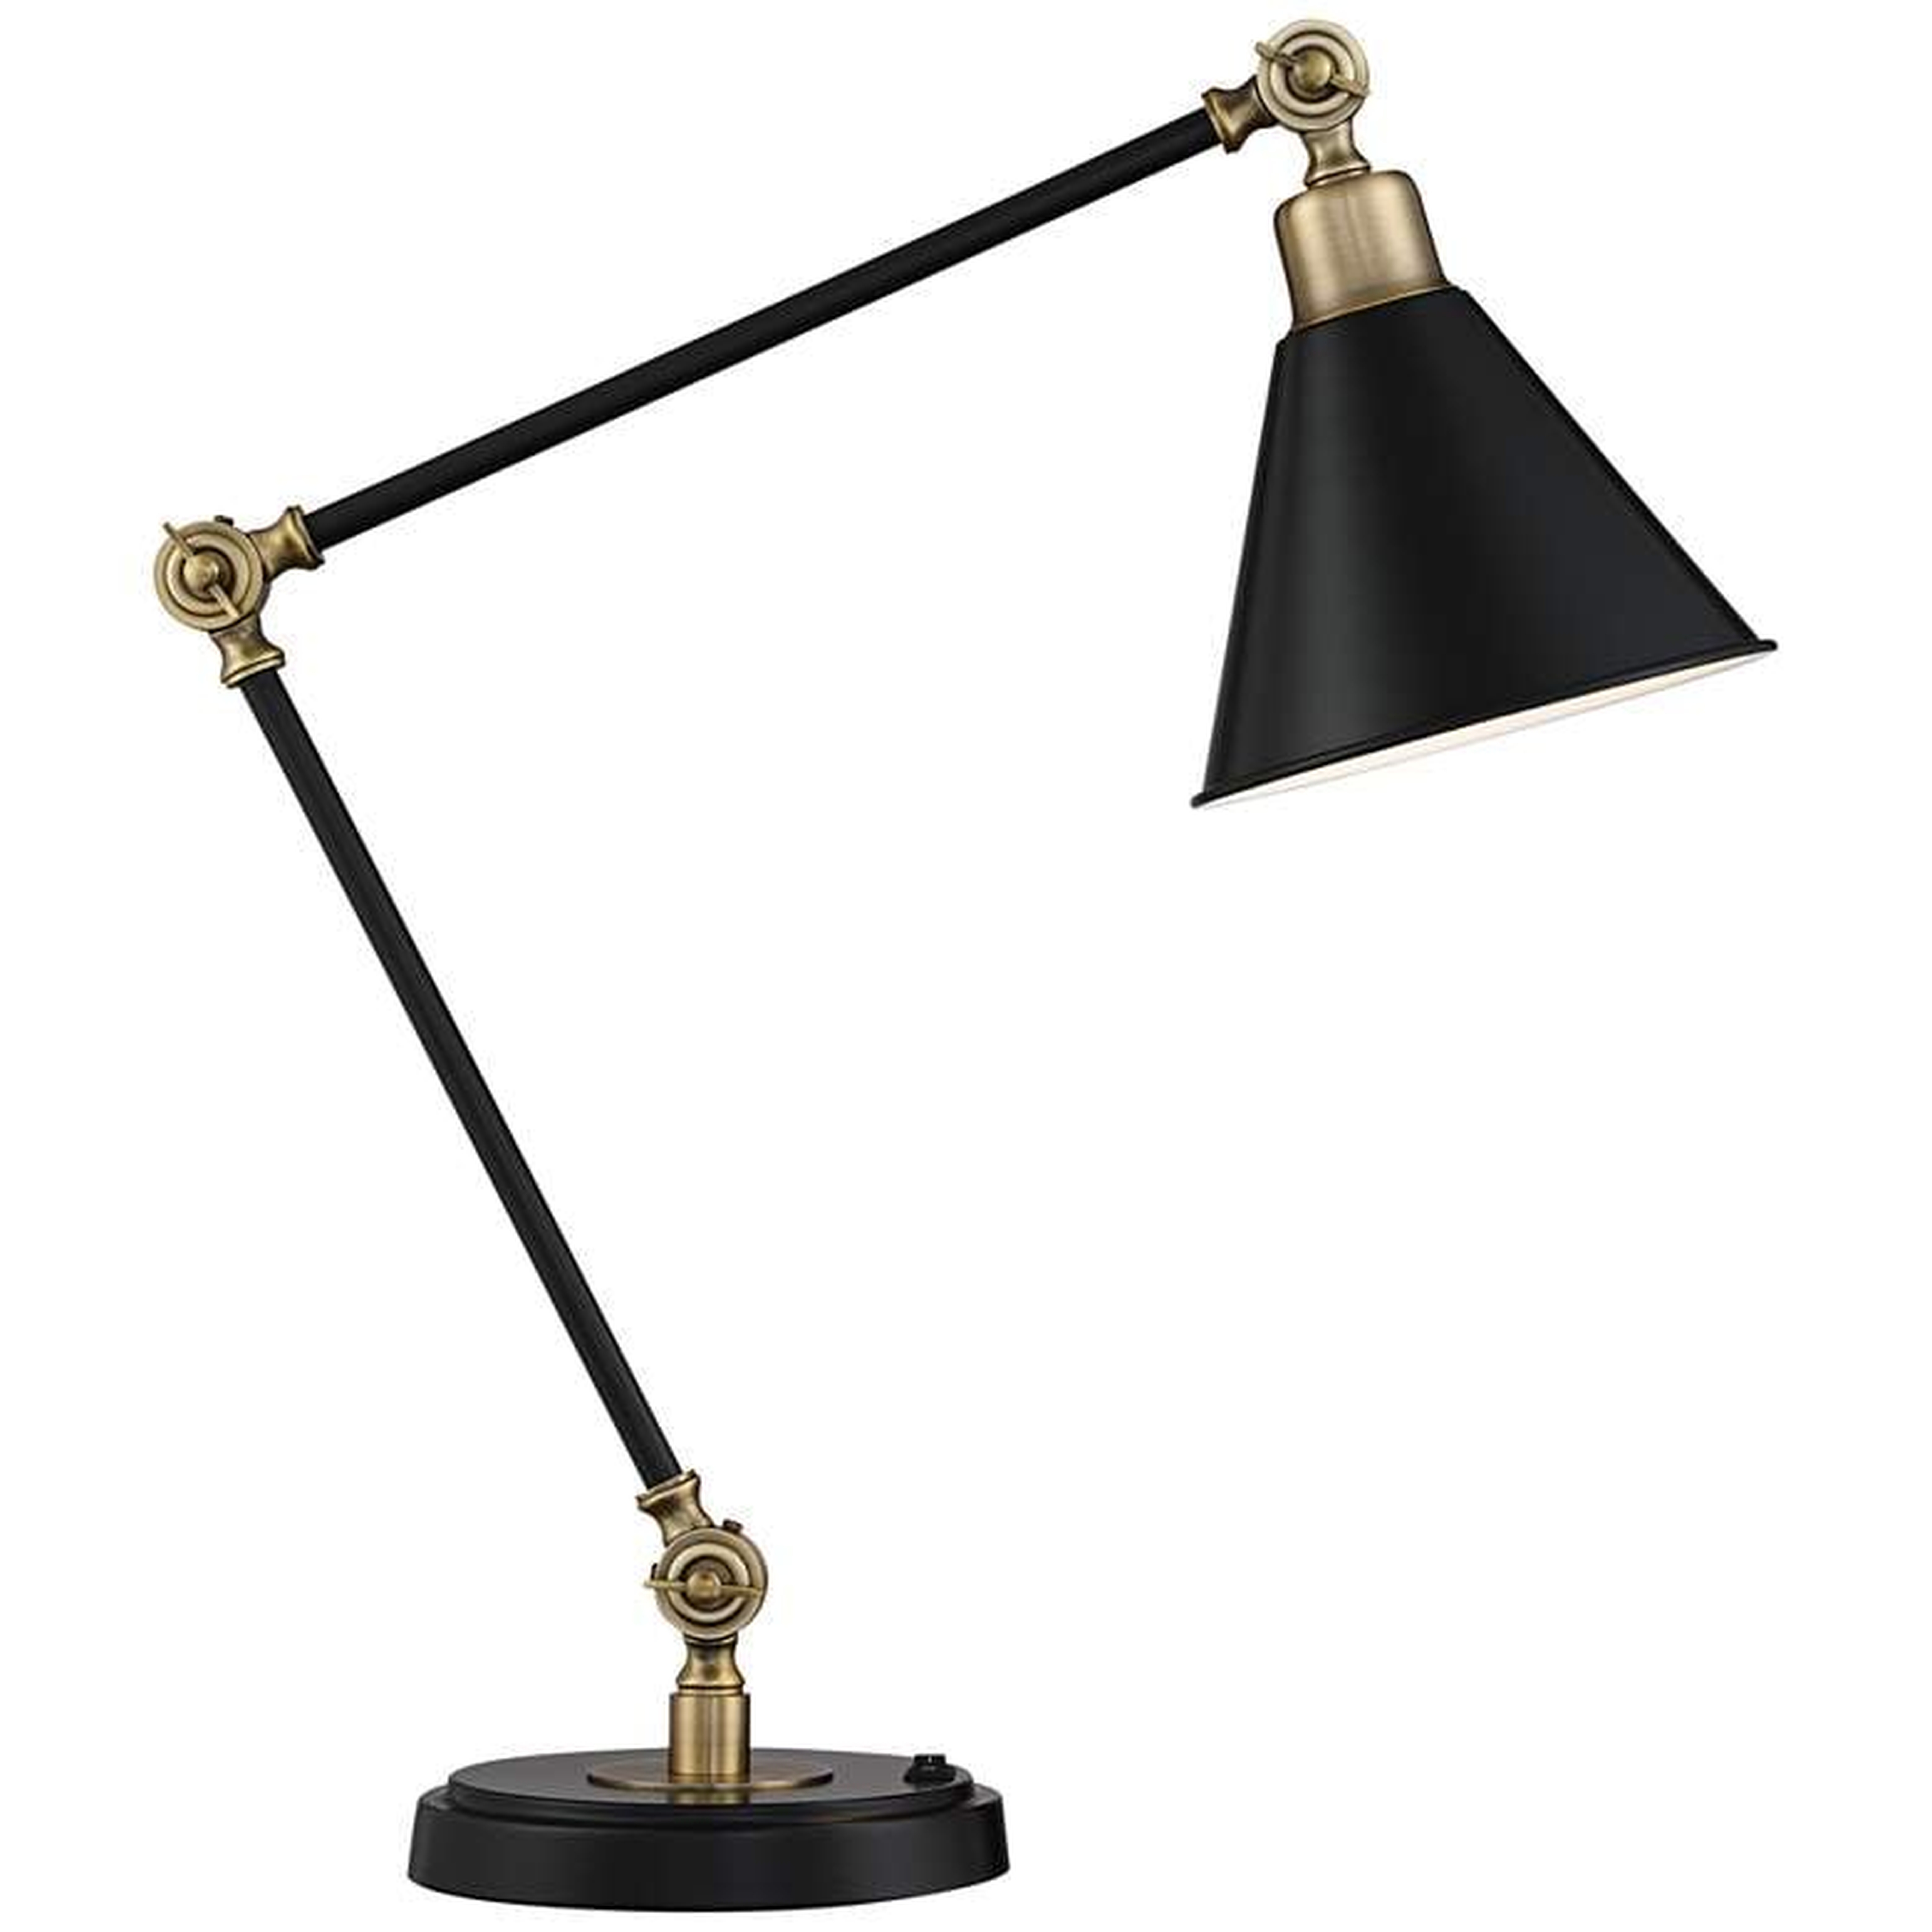 Wray Black Antique Brass Adjustable Desk Lamp with USB Port - Lamps Plus